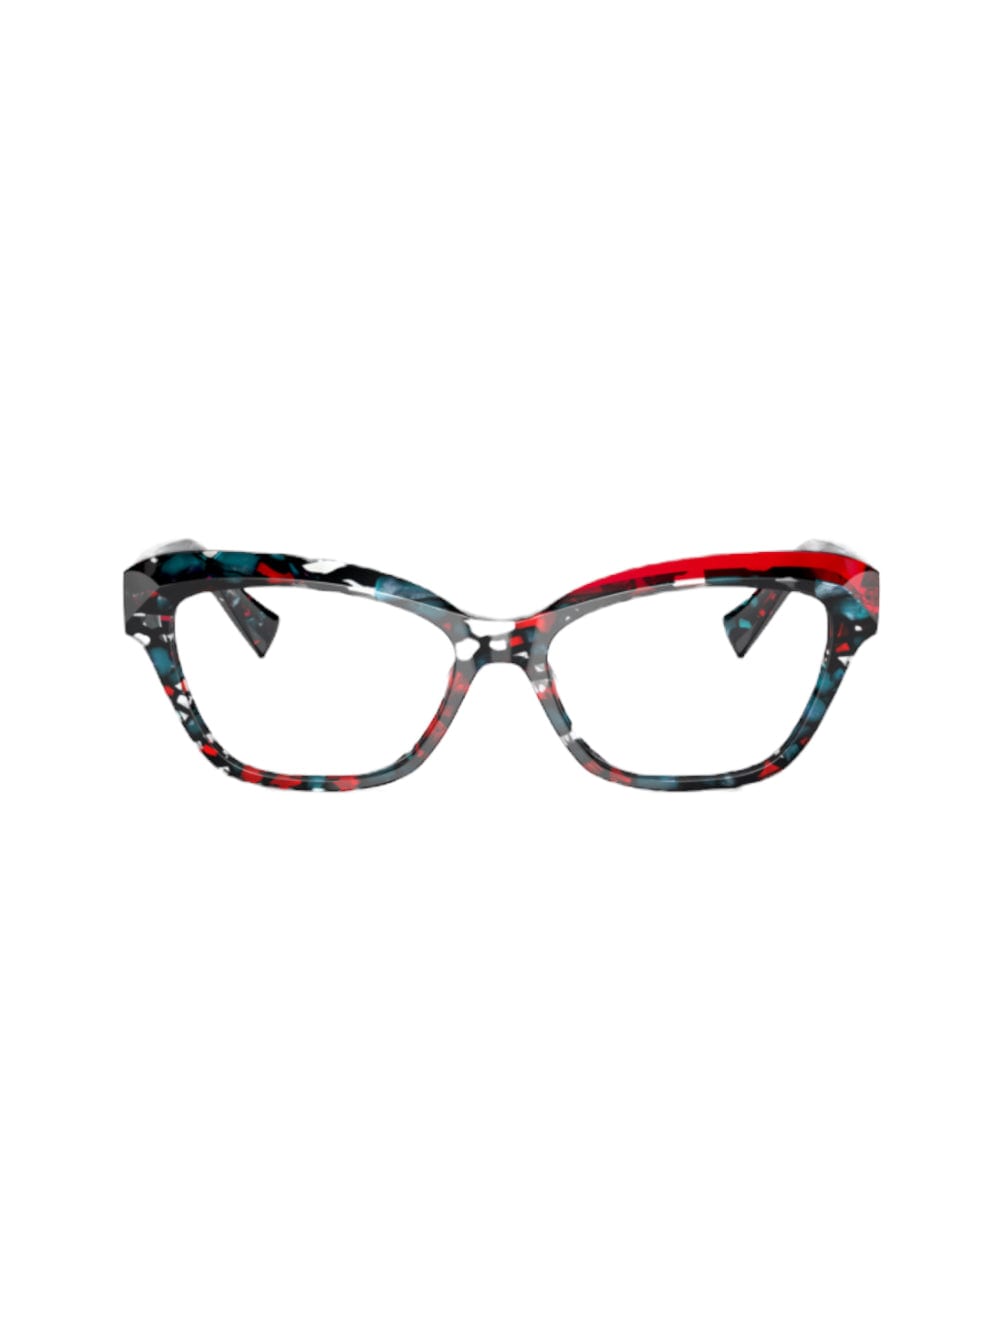 Alain Mikli Sephine - 3147 - Red/blue Glasses